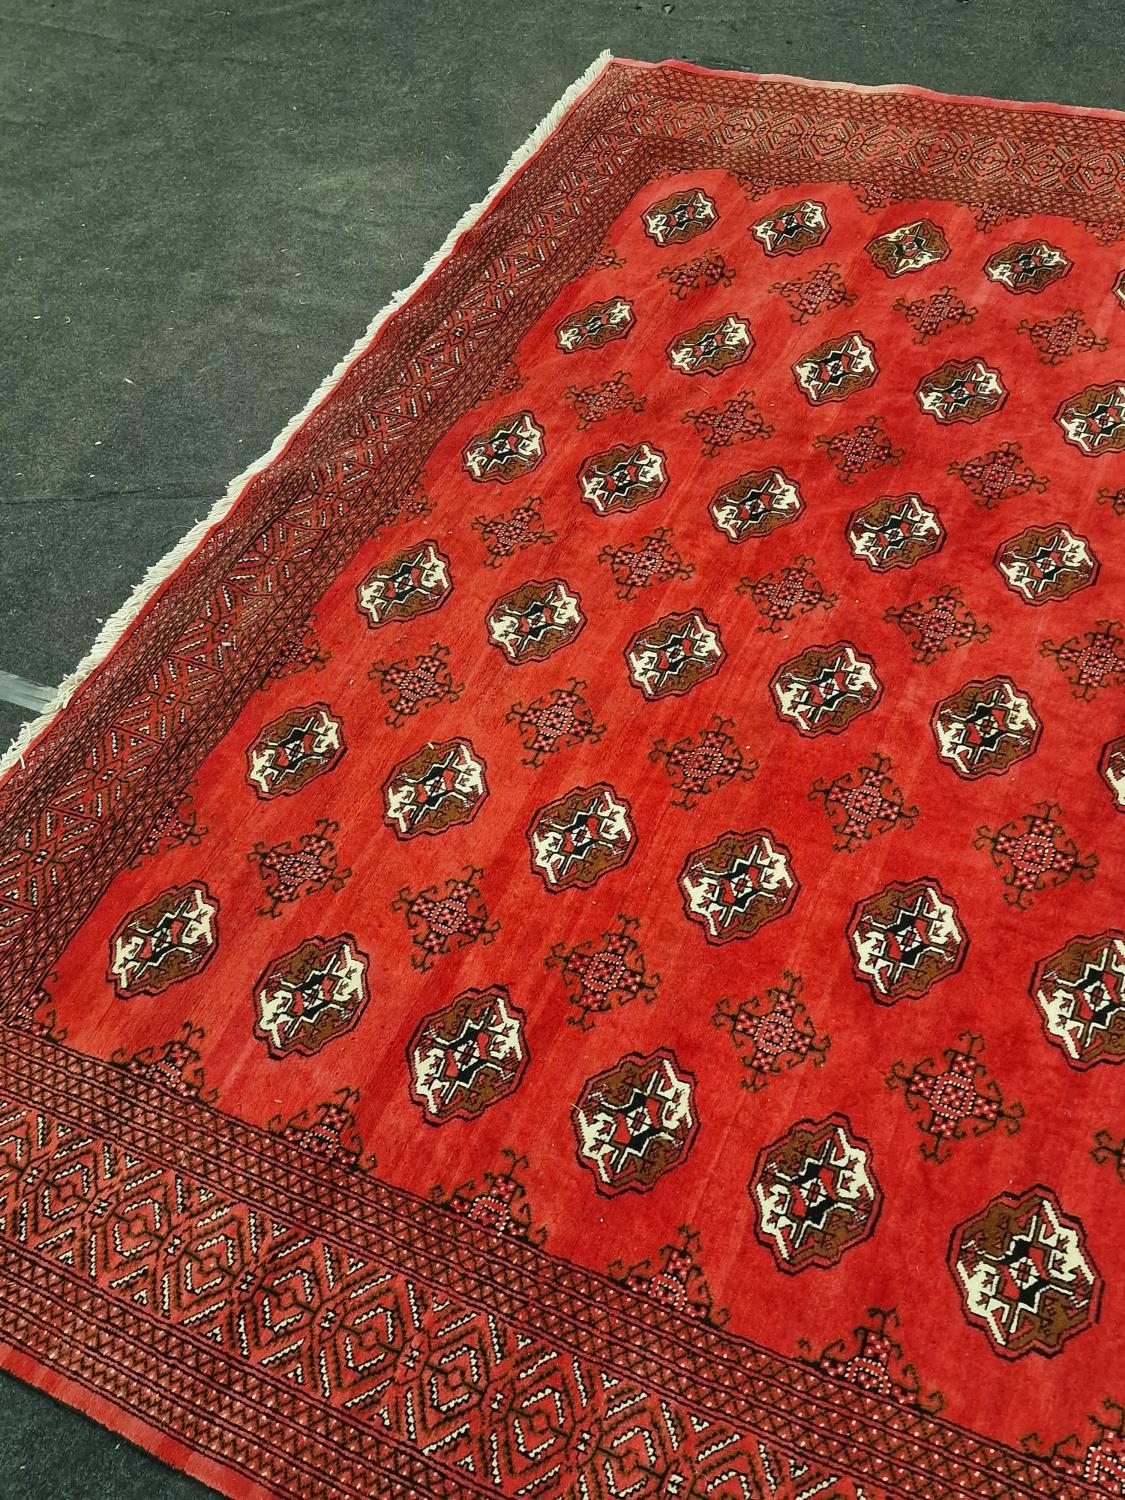 Large room size red patterned carpet 370x295cm. - Image 2 of 4